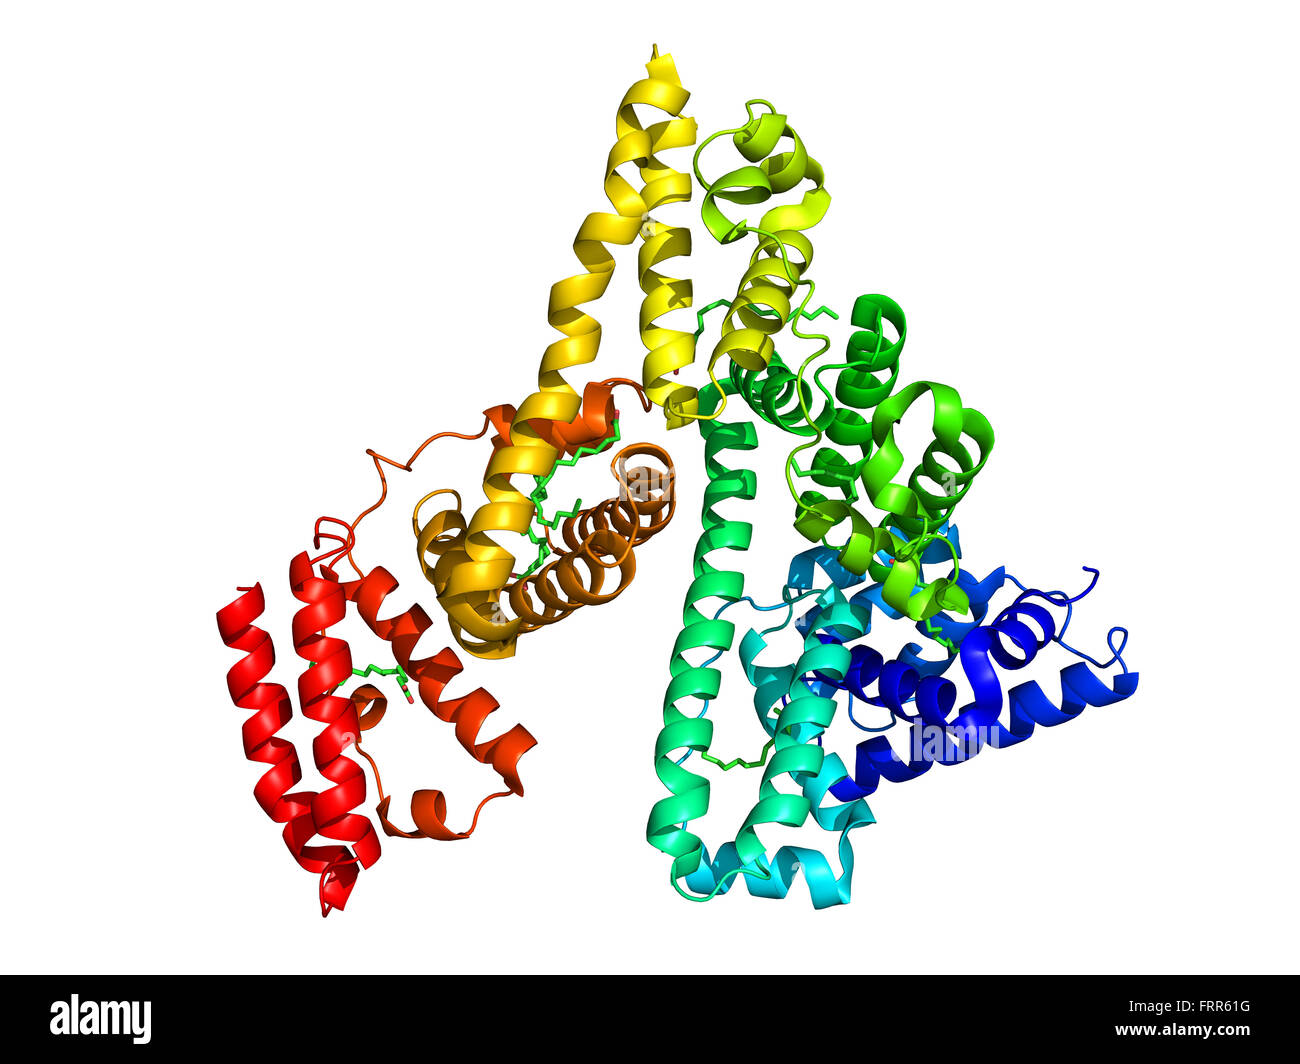 Serum albumin molecular structure on a white background Stock Photo